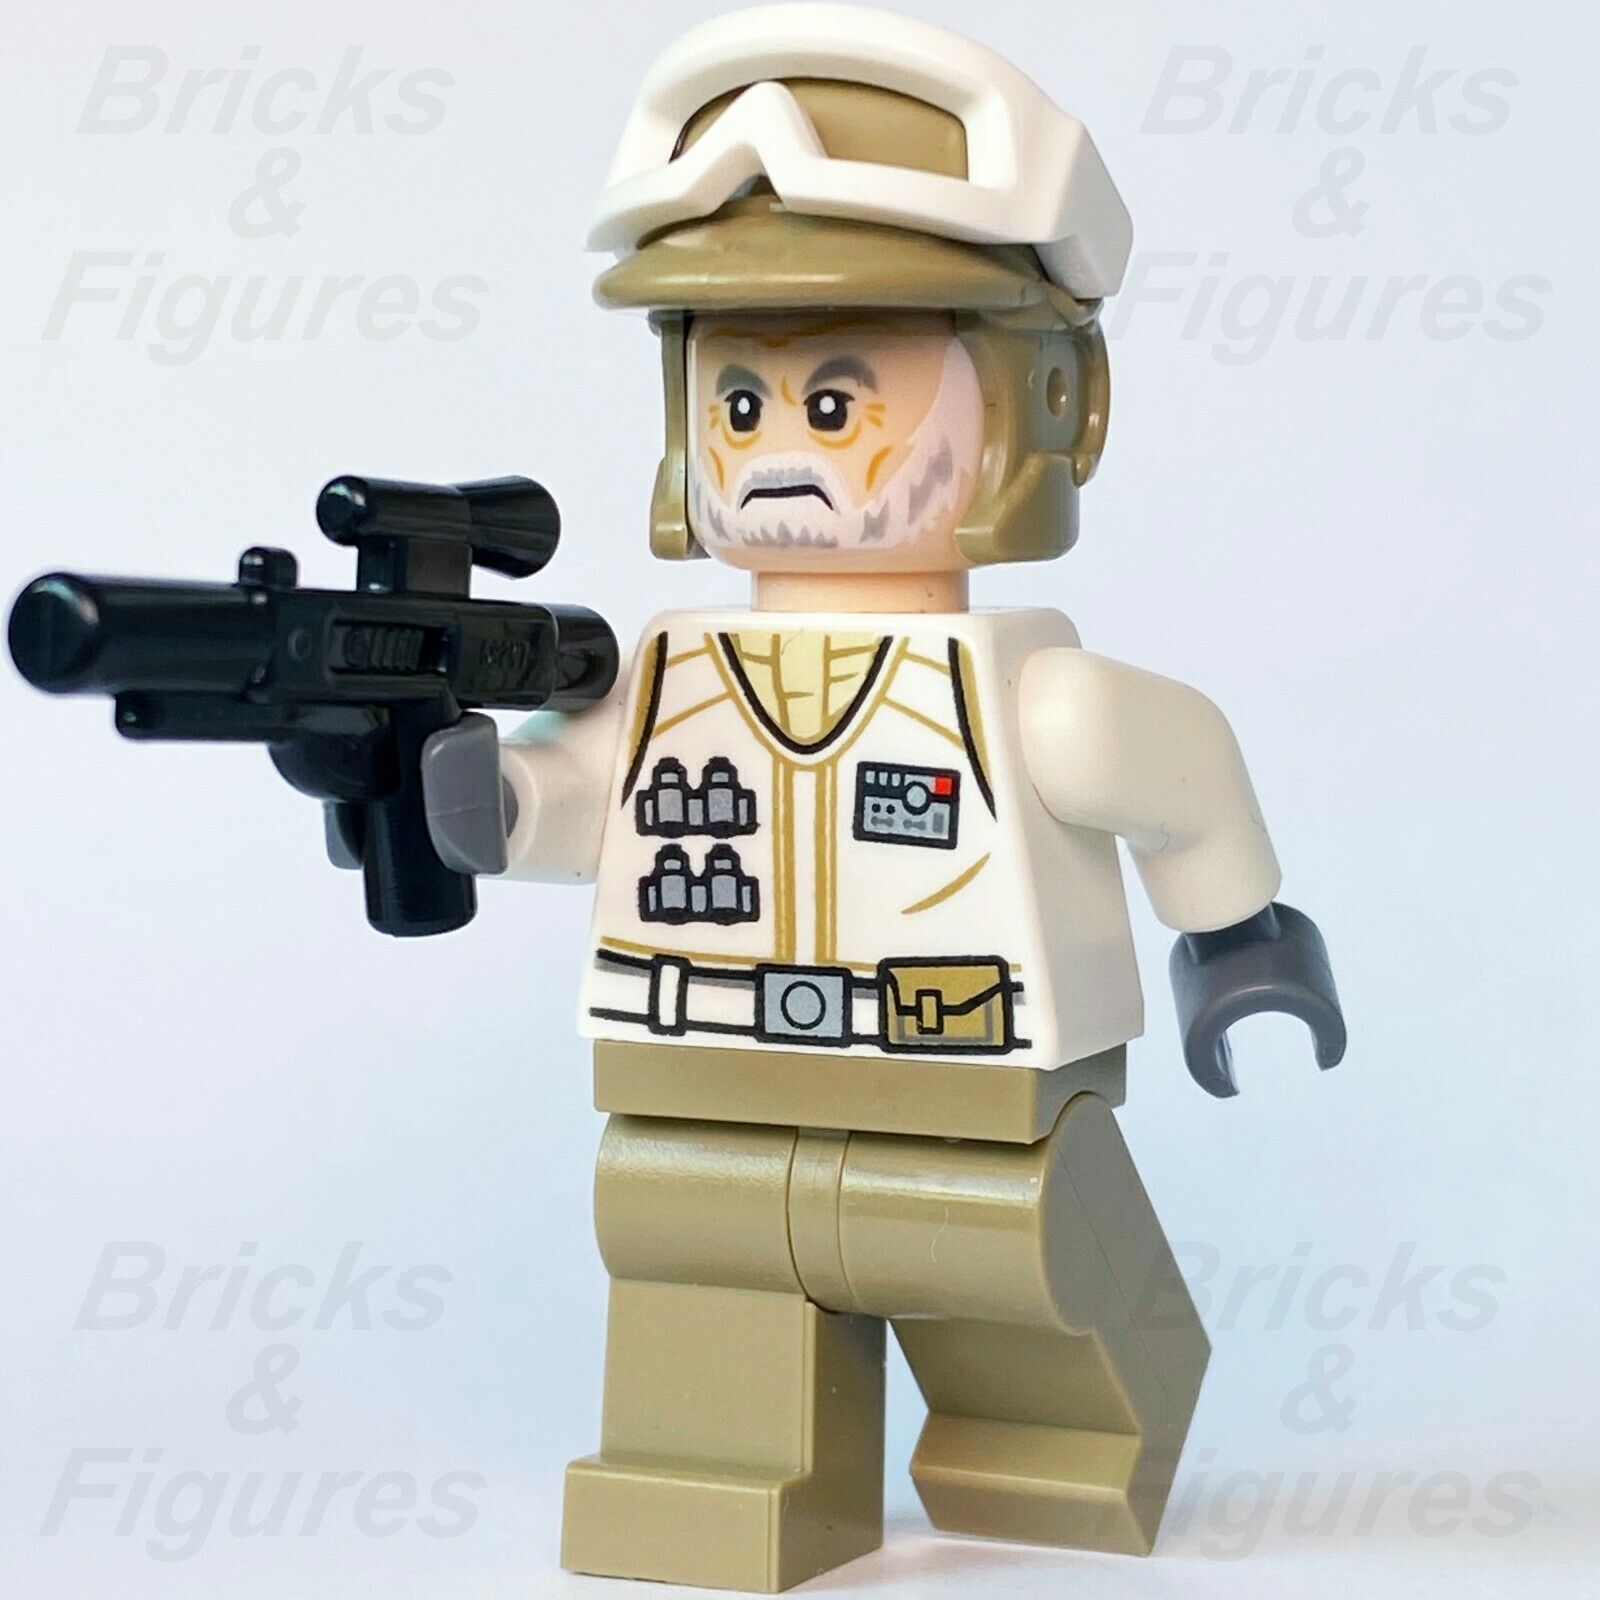 New Star Wars LEGO Hoth Rebel Trooper with White Beard Minifigure 75241 - Bricks & Figures